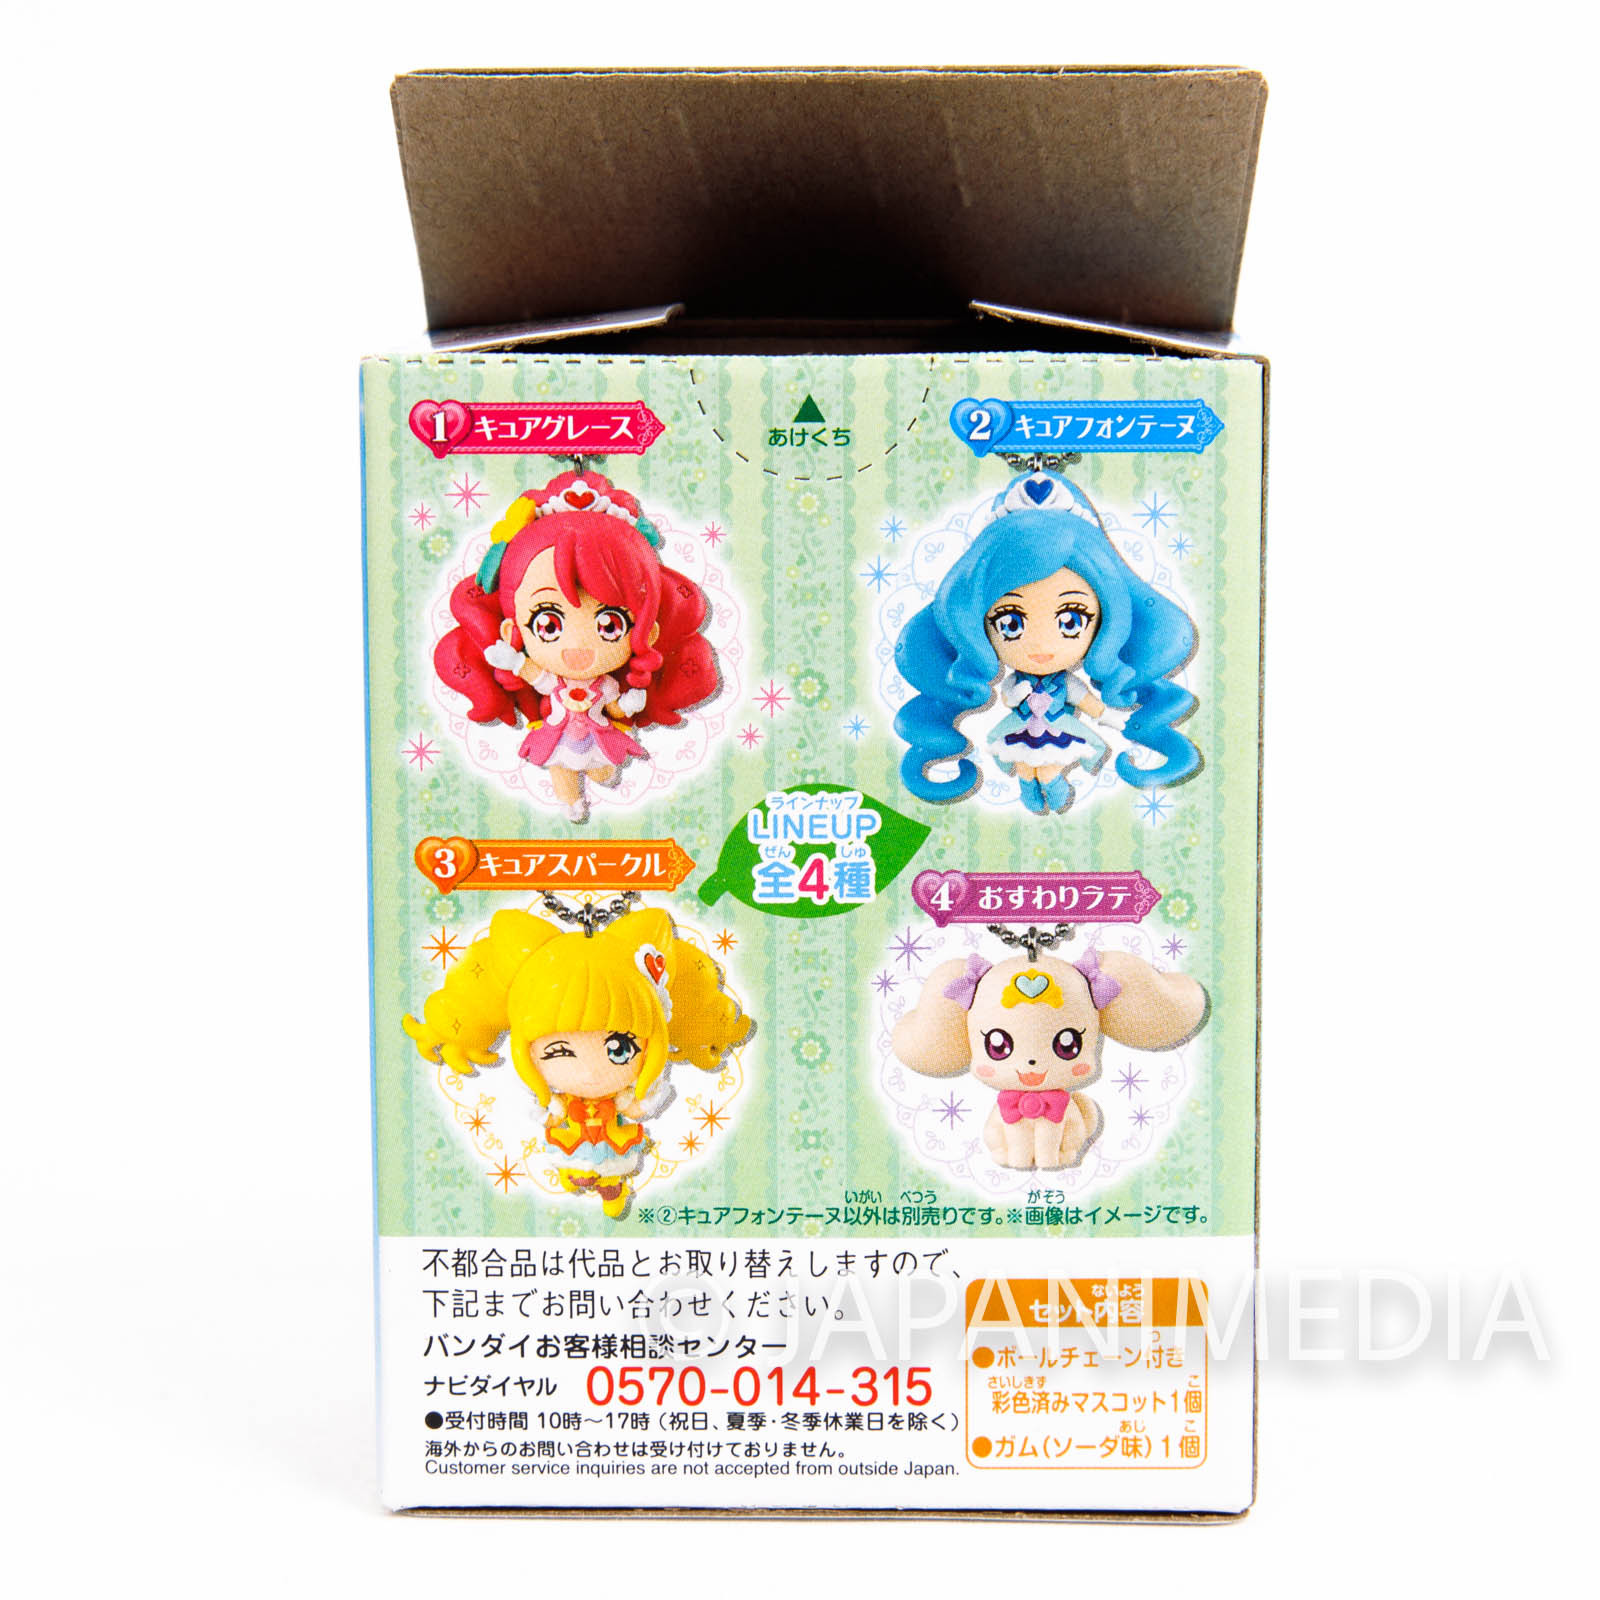 Healin' Good Pretty Cure Cure Fontaine PreCure Mascot Figure Ball Keychain JAPAN ANIME